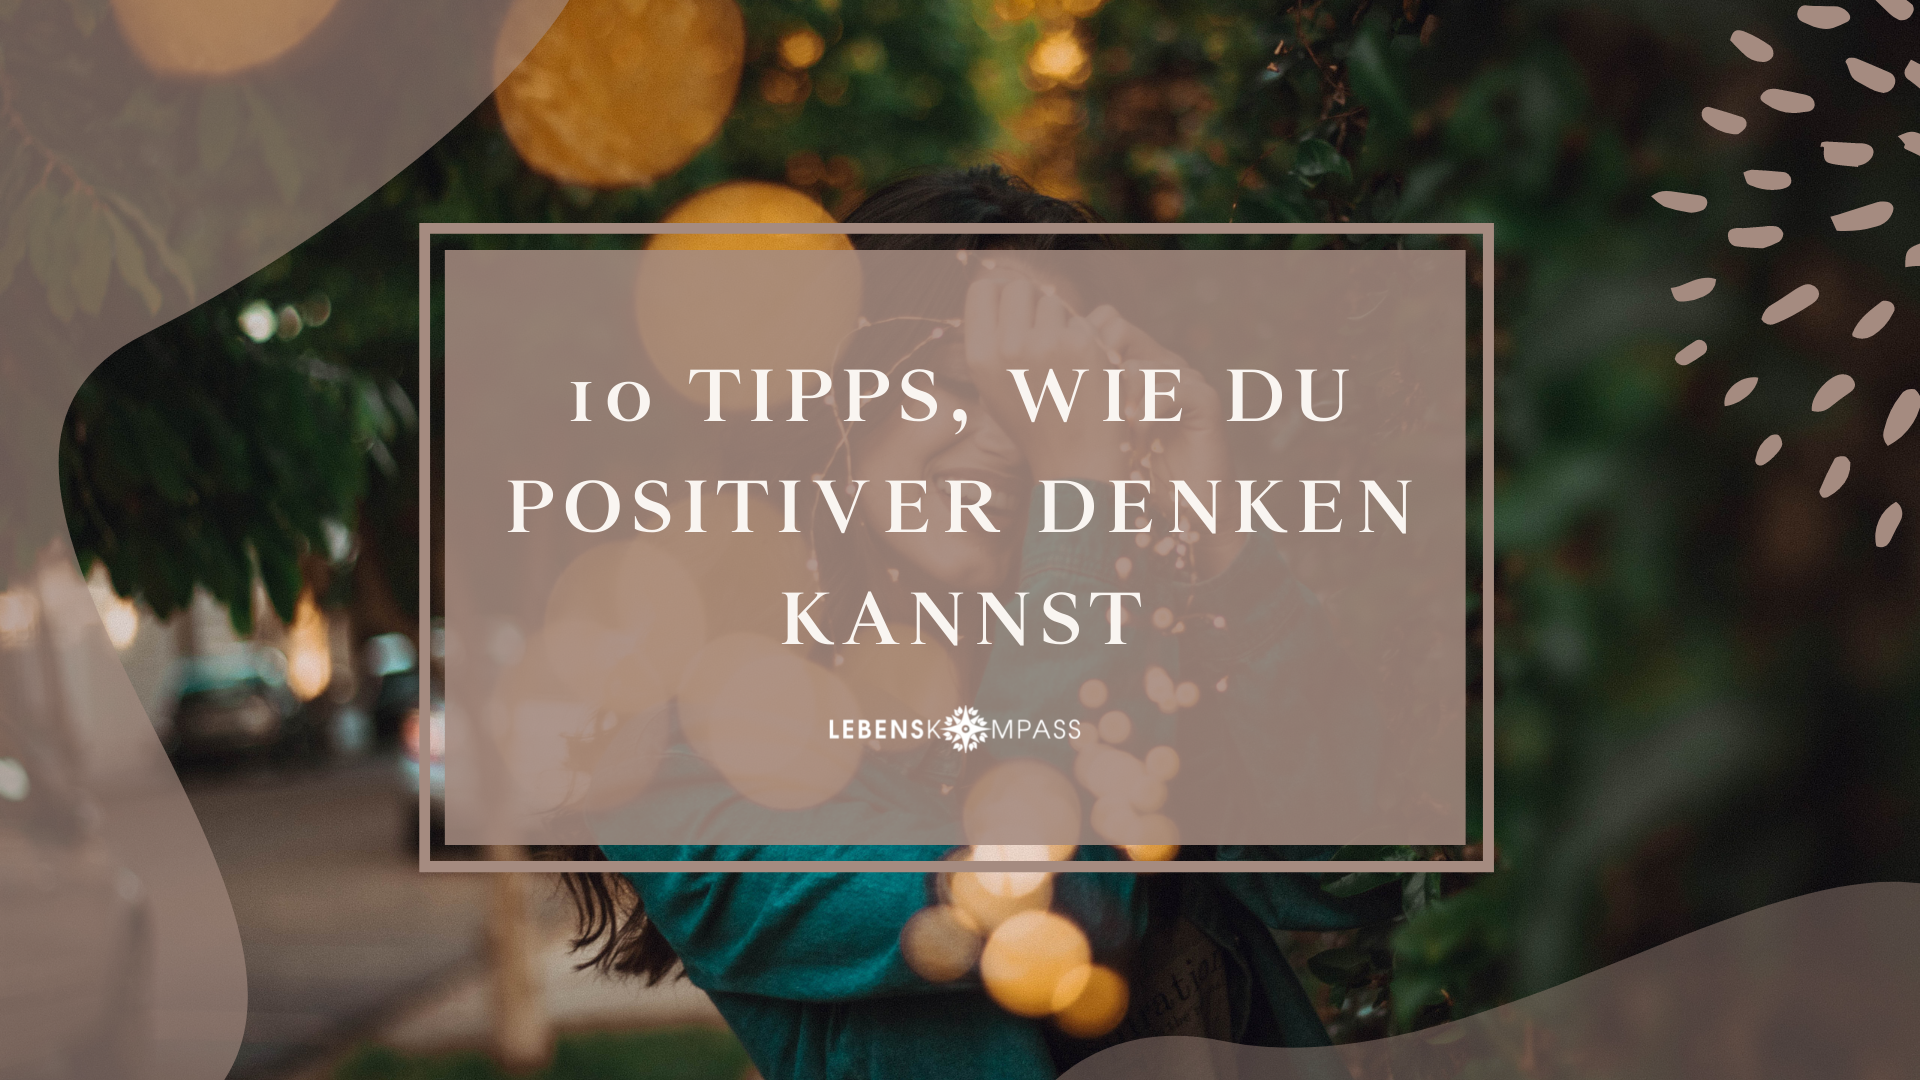 Positiver denken - 10 Tipps